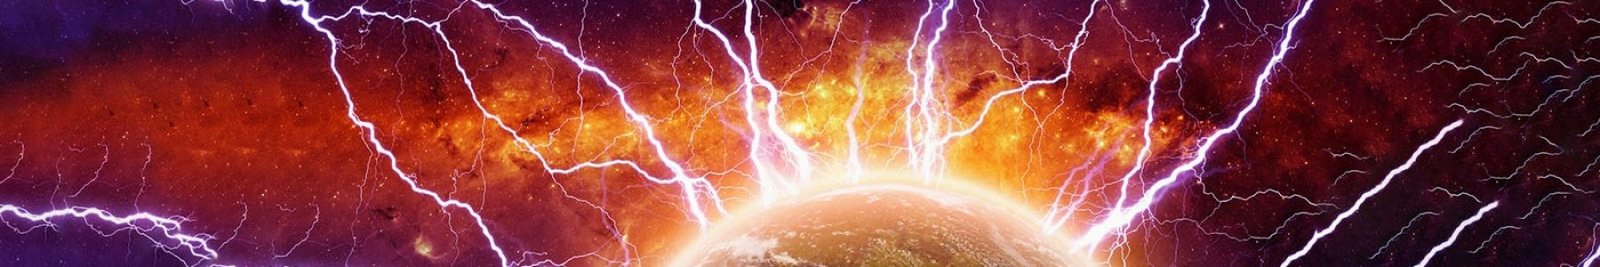 Predictions of Apocalypse and Destructive Weathers